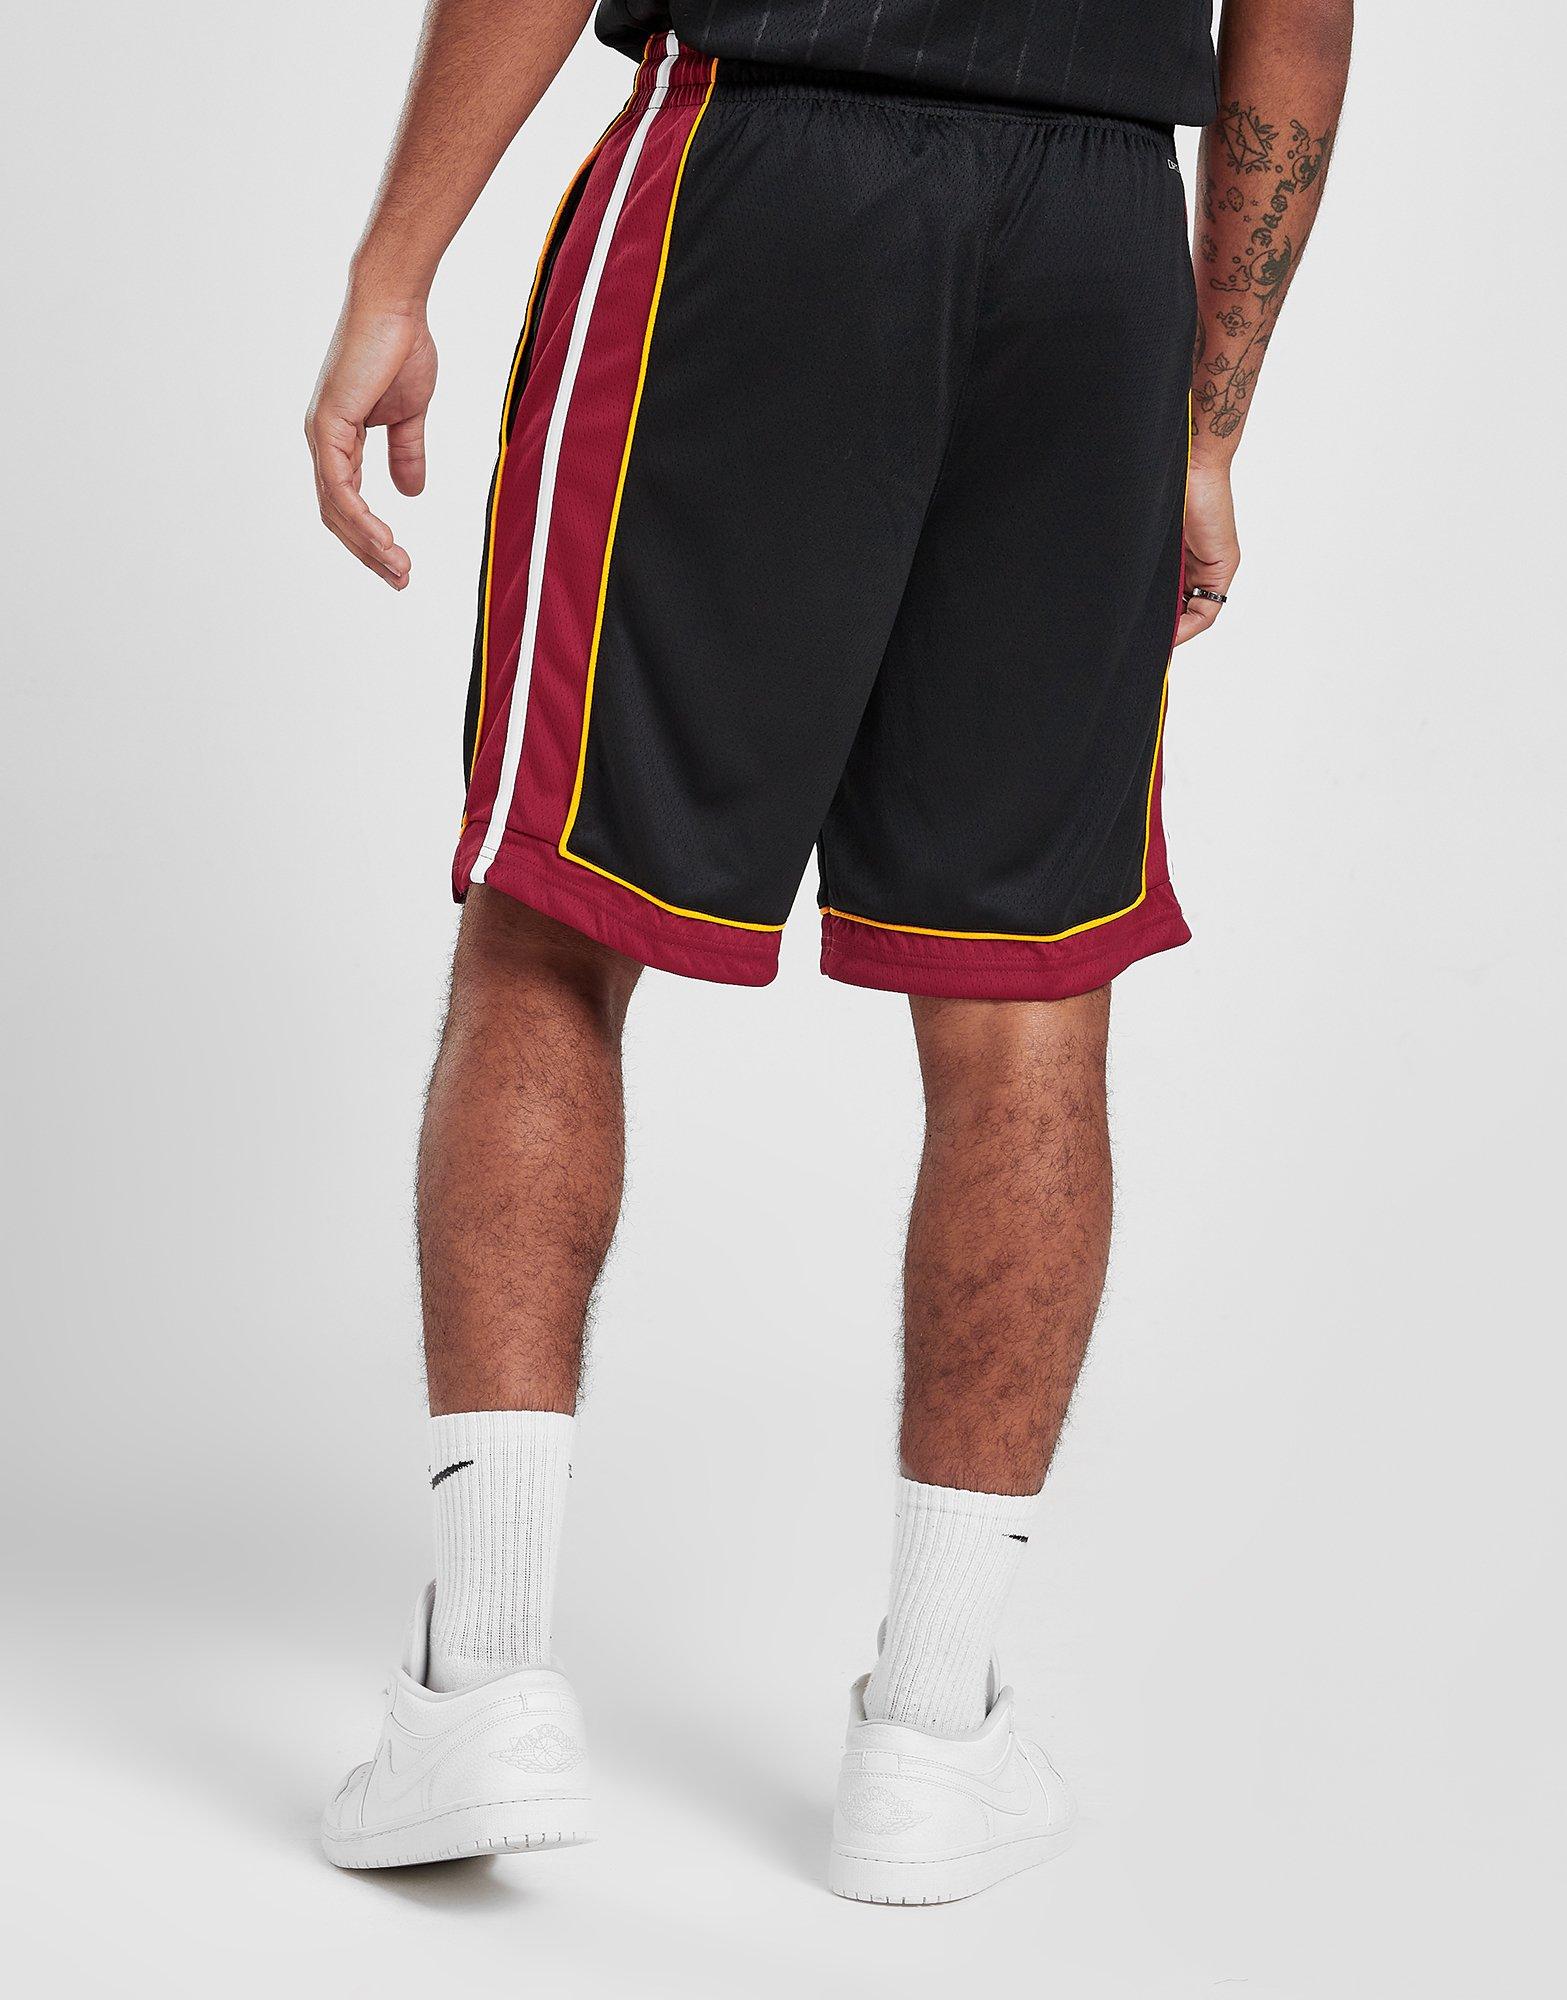 Nike Men's NBA Miami Heat City Edition Swingman Shorts Black Size